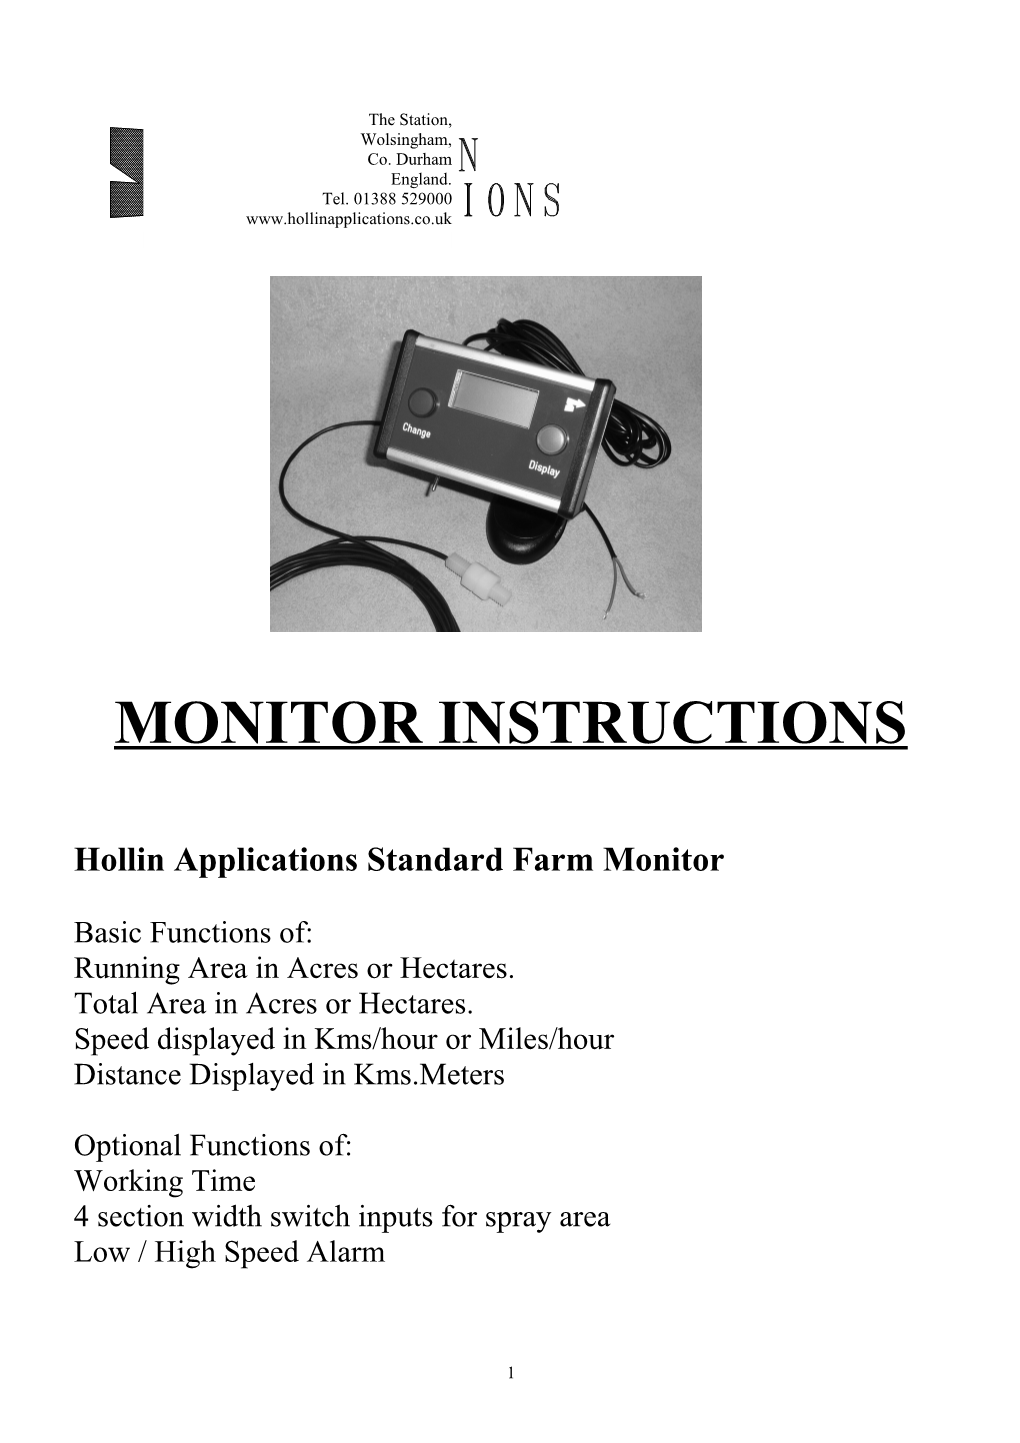 Hollin Applications Standard Farm Monitor